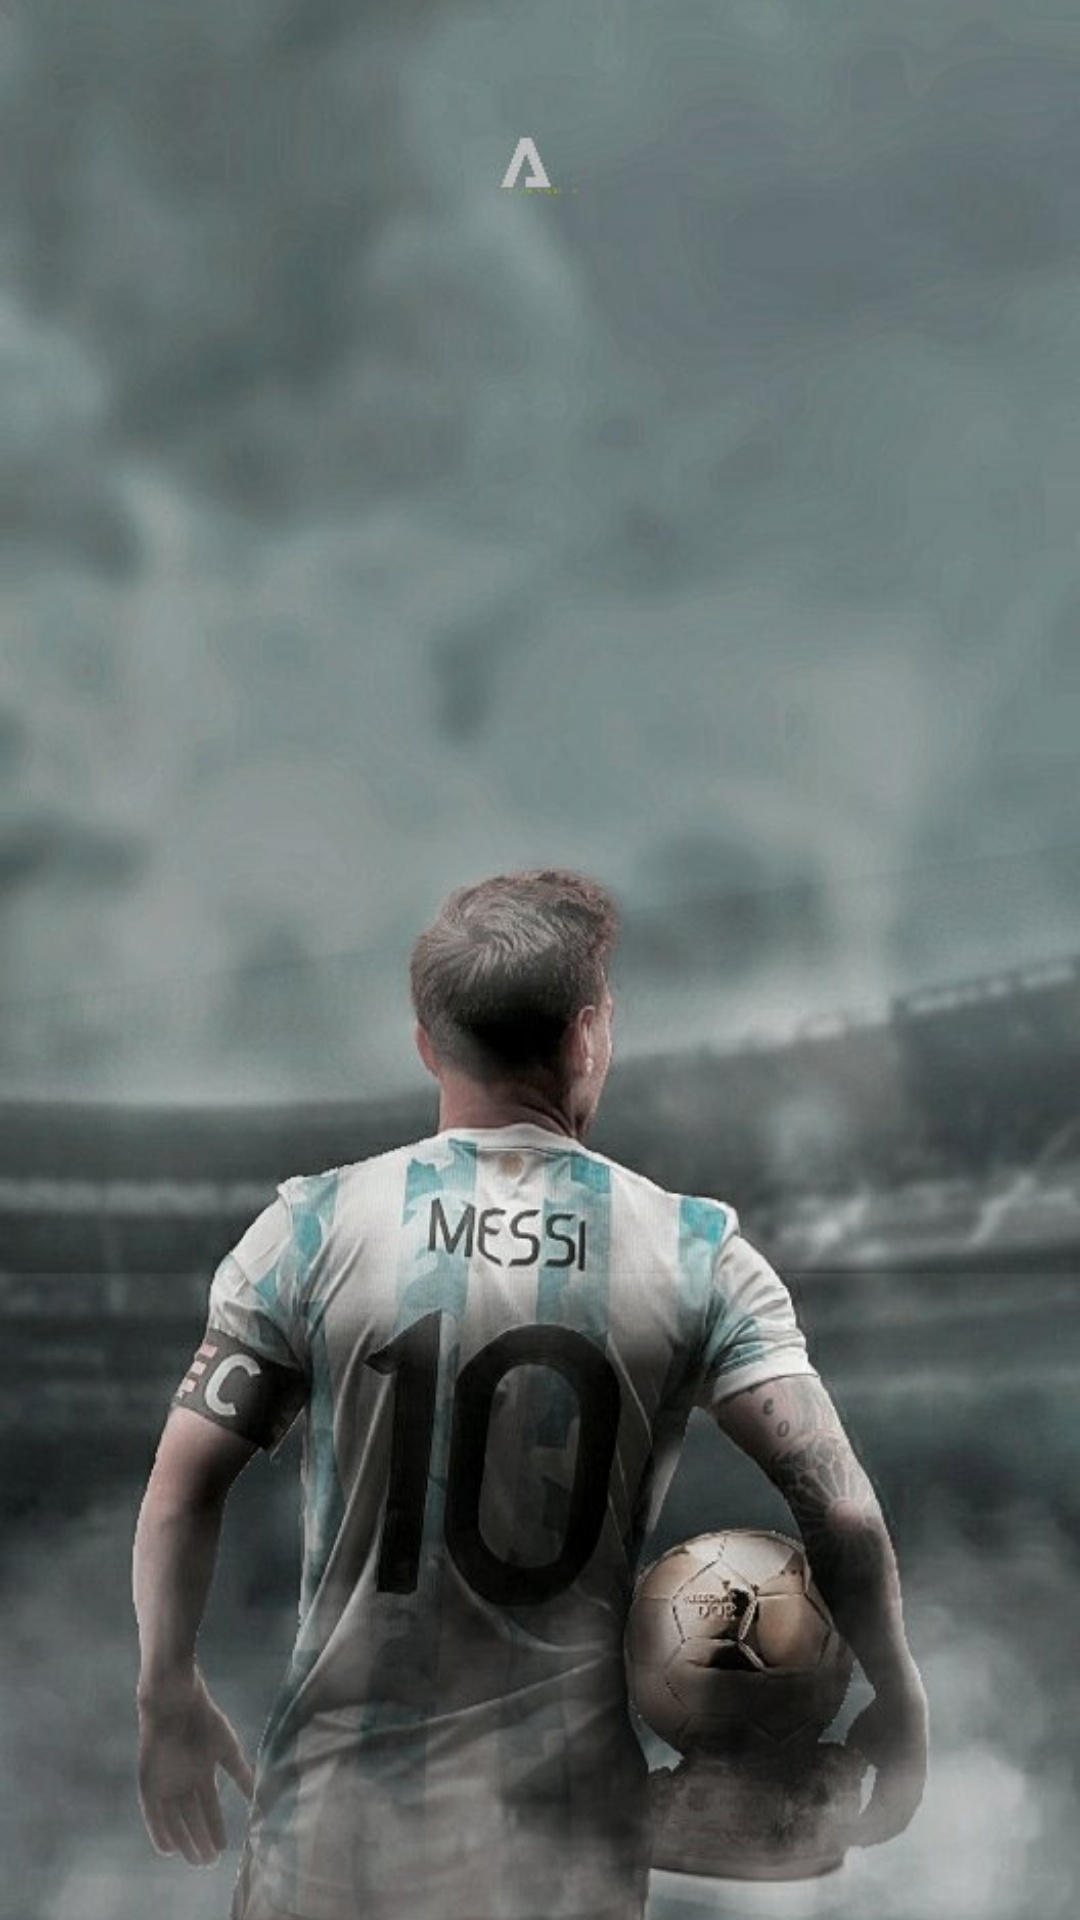 Messi Fifa World Cup Wallpaper Messi Fifa World Cup Wallpaper Download